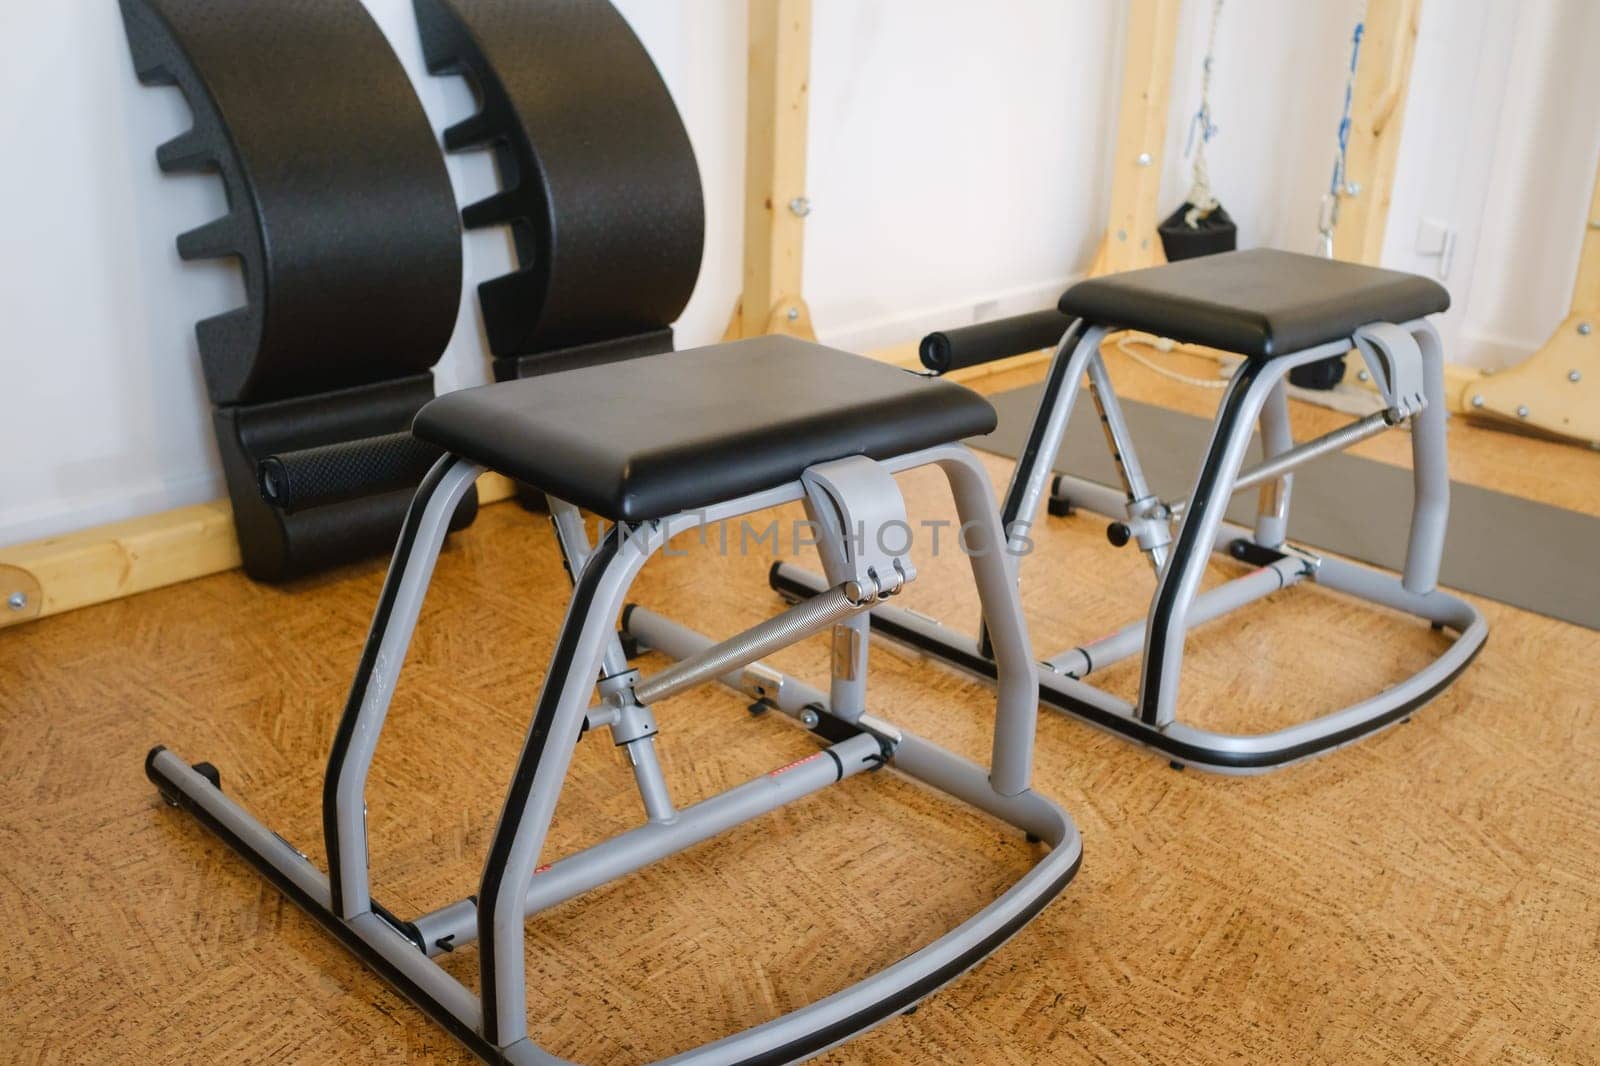 Pilates exercise equipment - yoga gym chair. Pilates equipment.